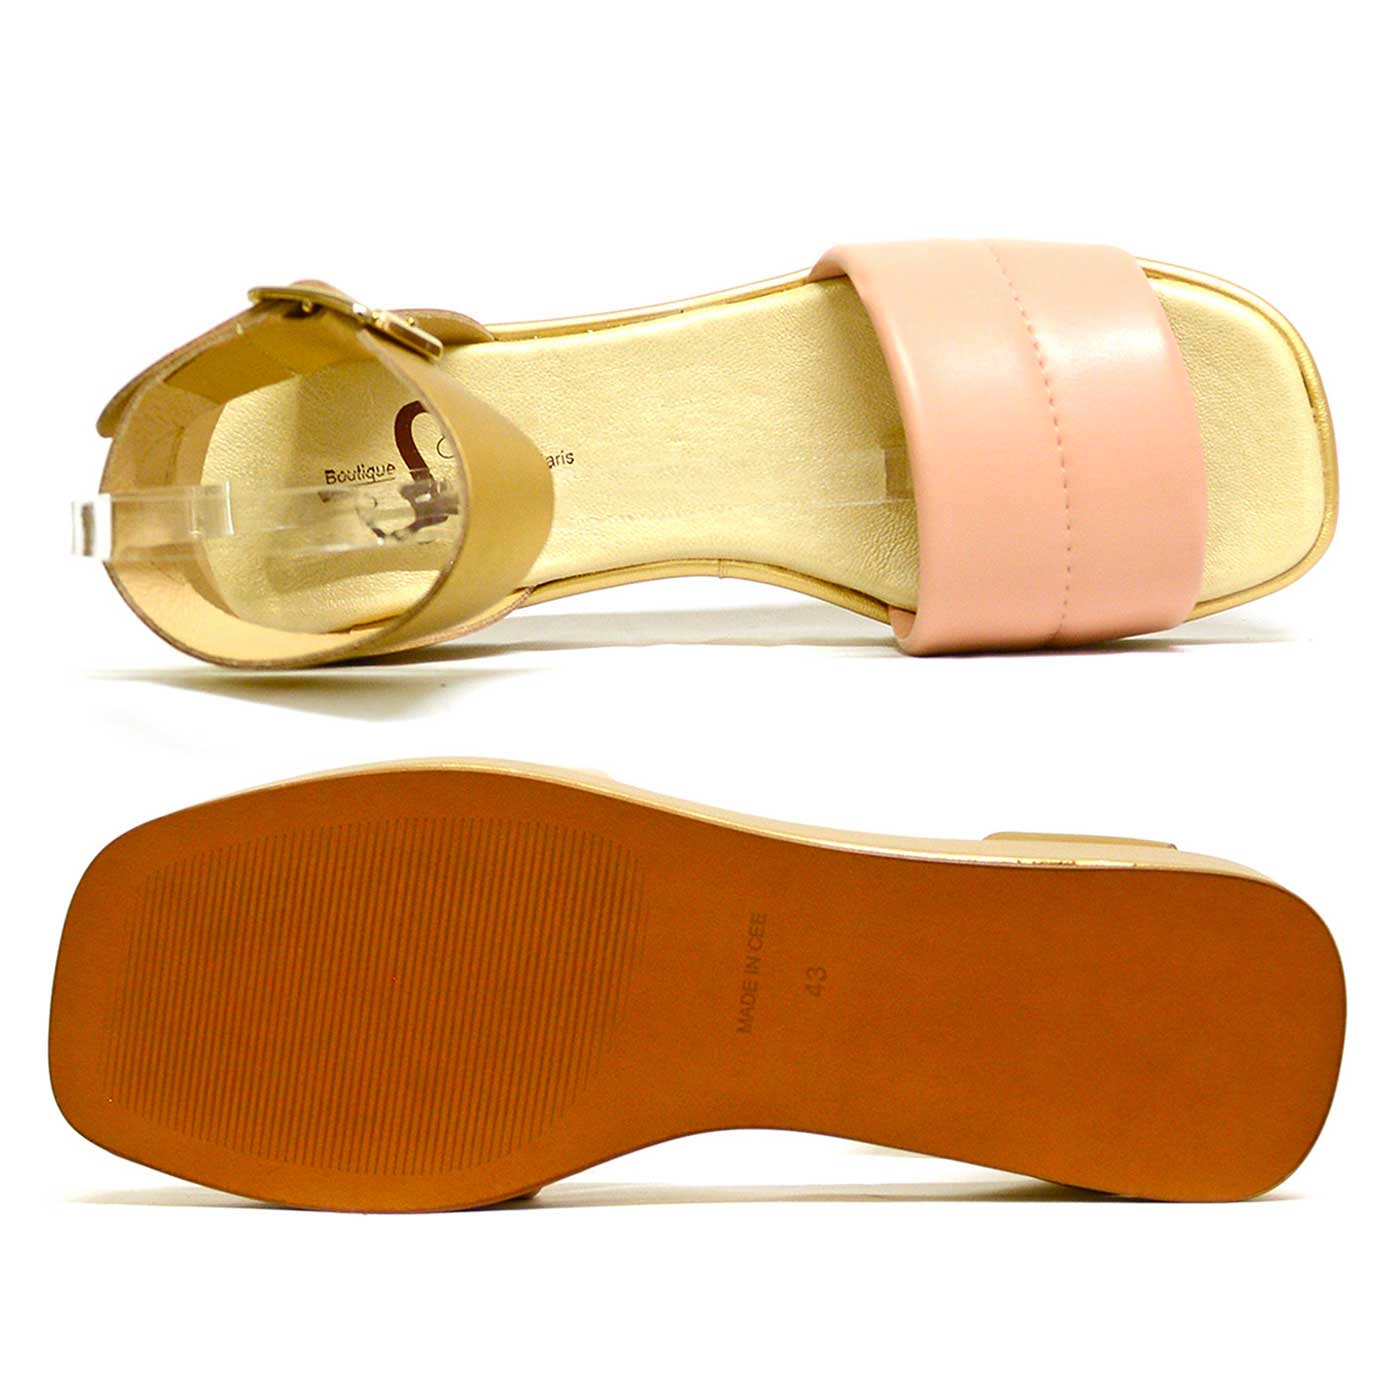 sandales cuir lisse metallise platine, chaussures femme grande taille